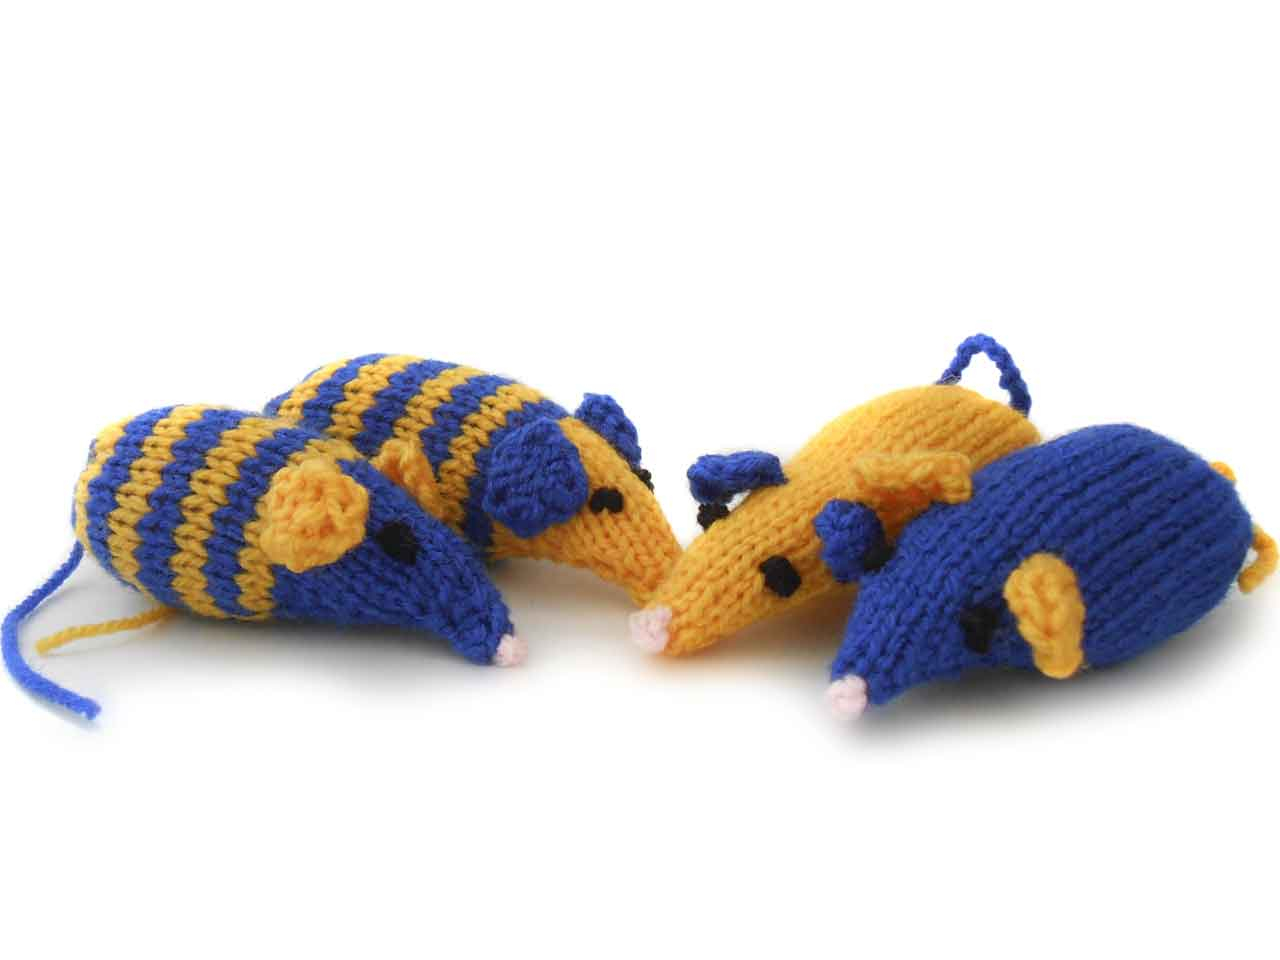 Knitting Patterns For Toys Uk Knitted Catnip Mice Saga